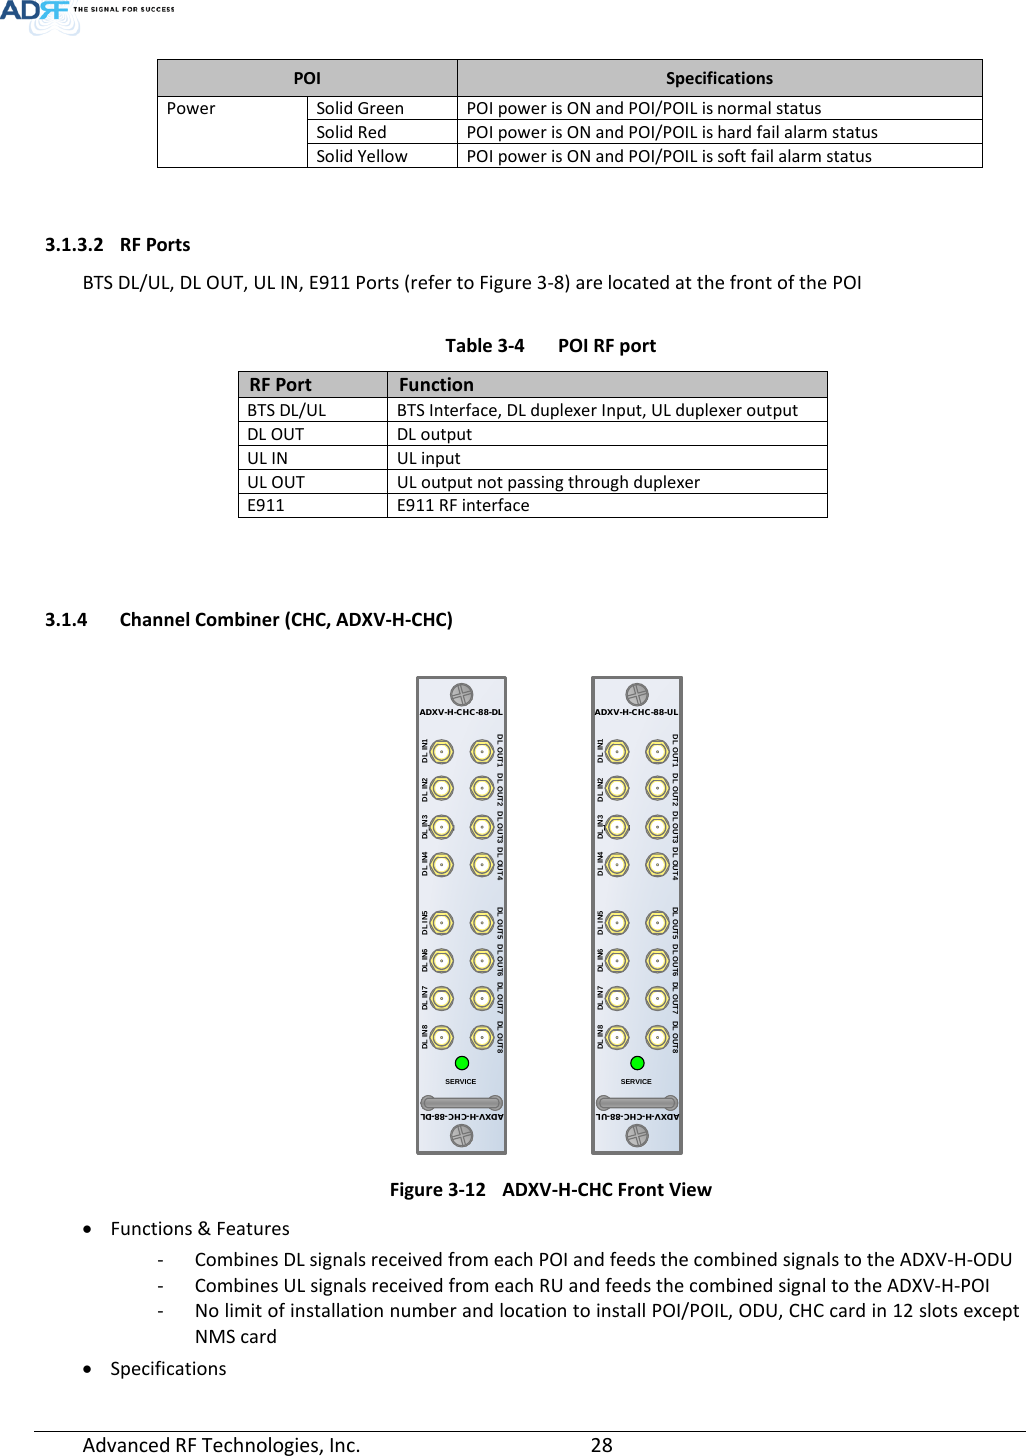 Page 28 of ADRF KOREA ADXV-R-336 DAS (Distributed Antenna System) User Manual ADXV DAS